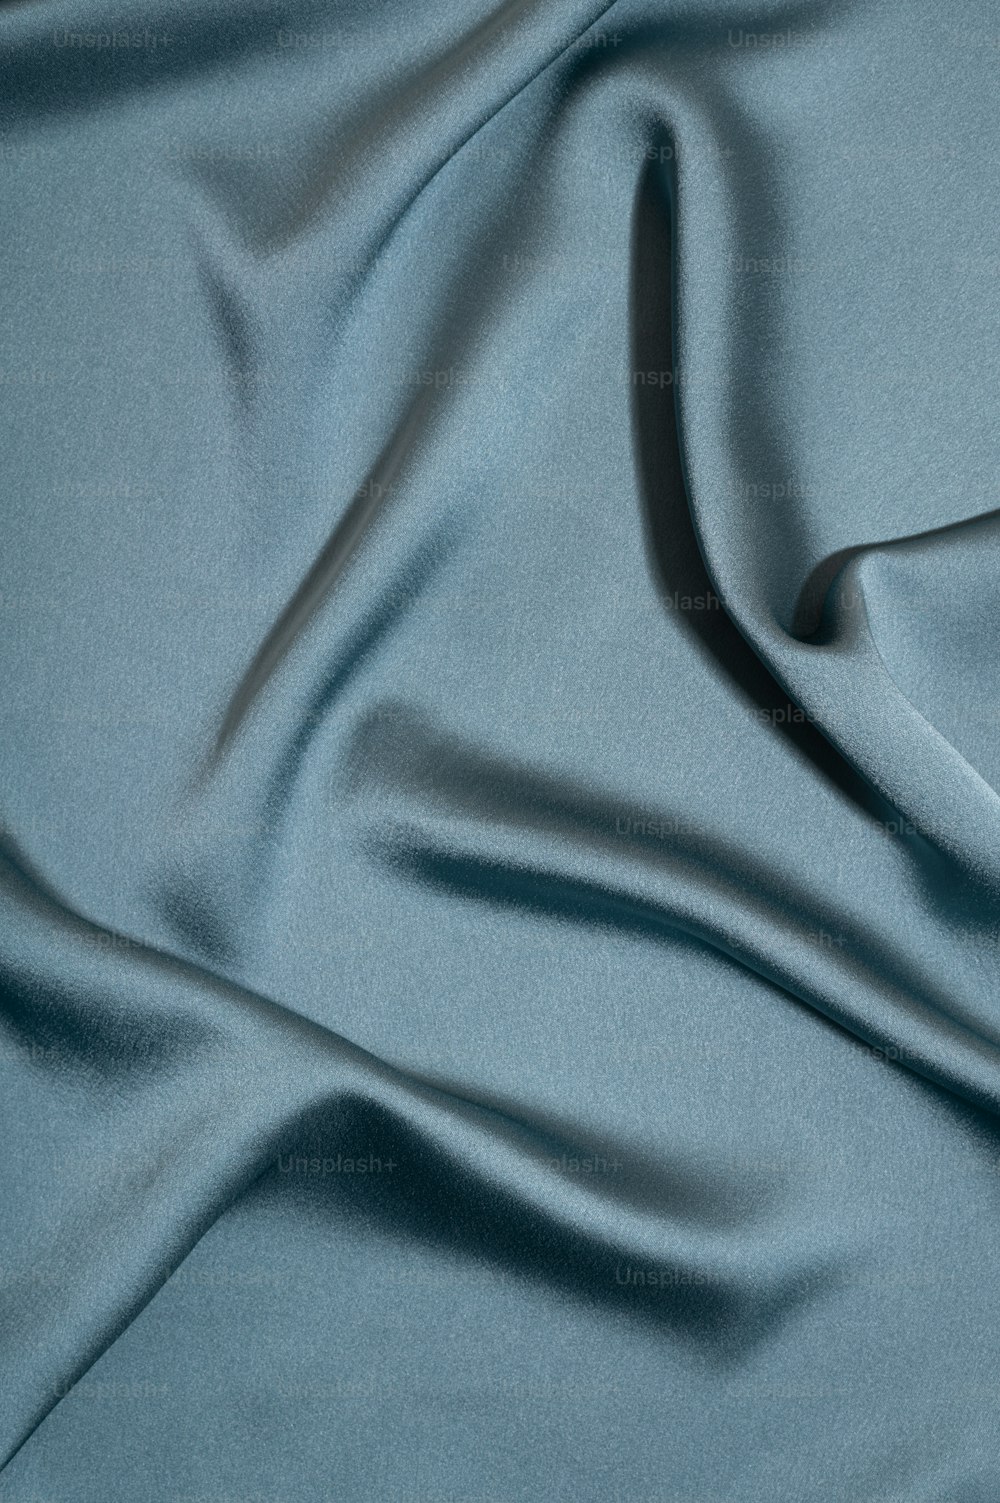 Premium Photo  Silk satin fabric green colour texture background